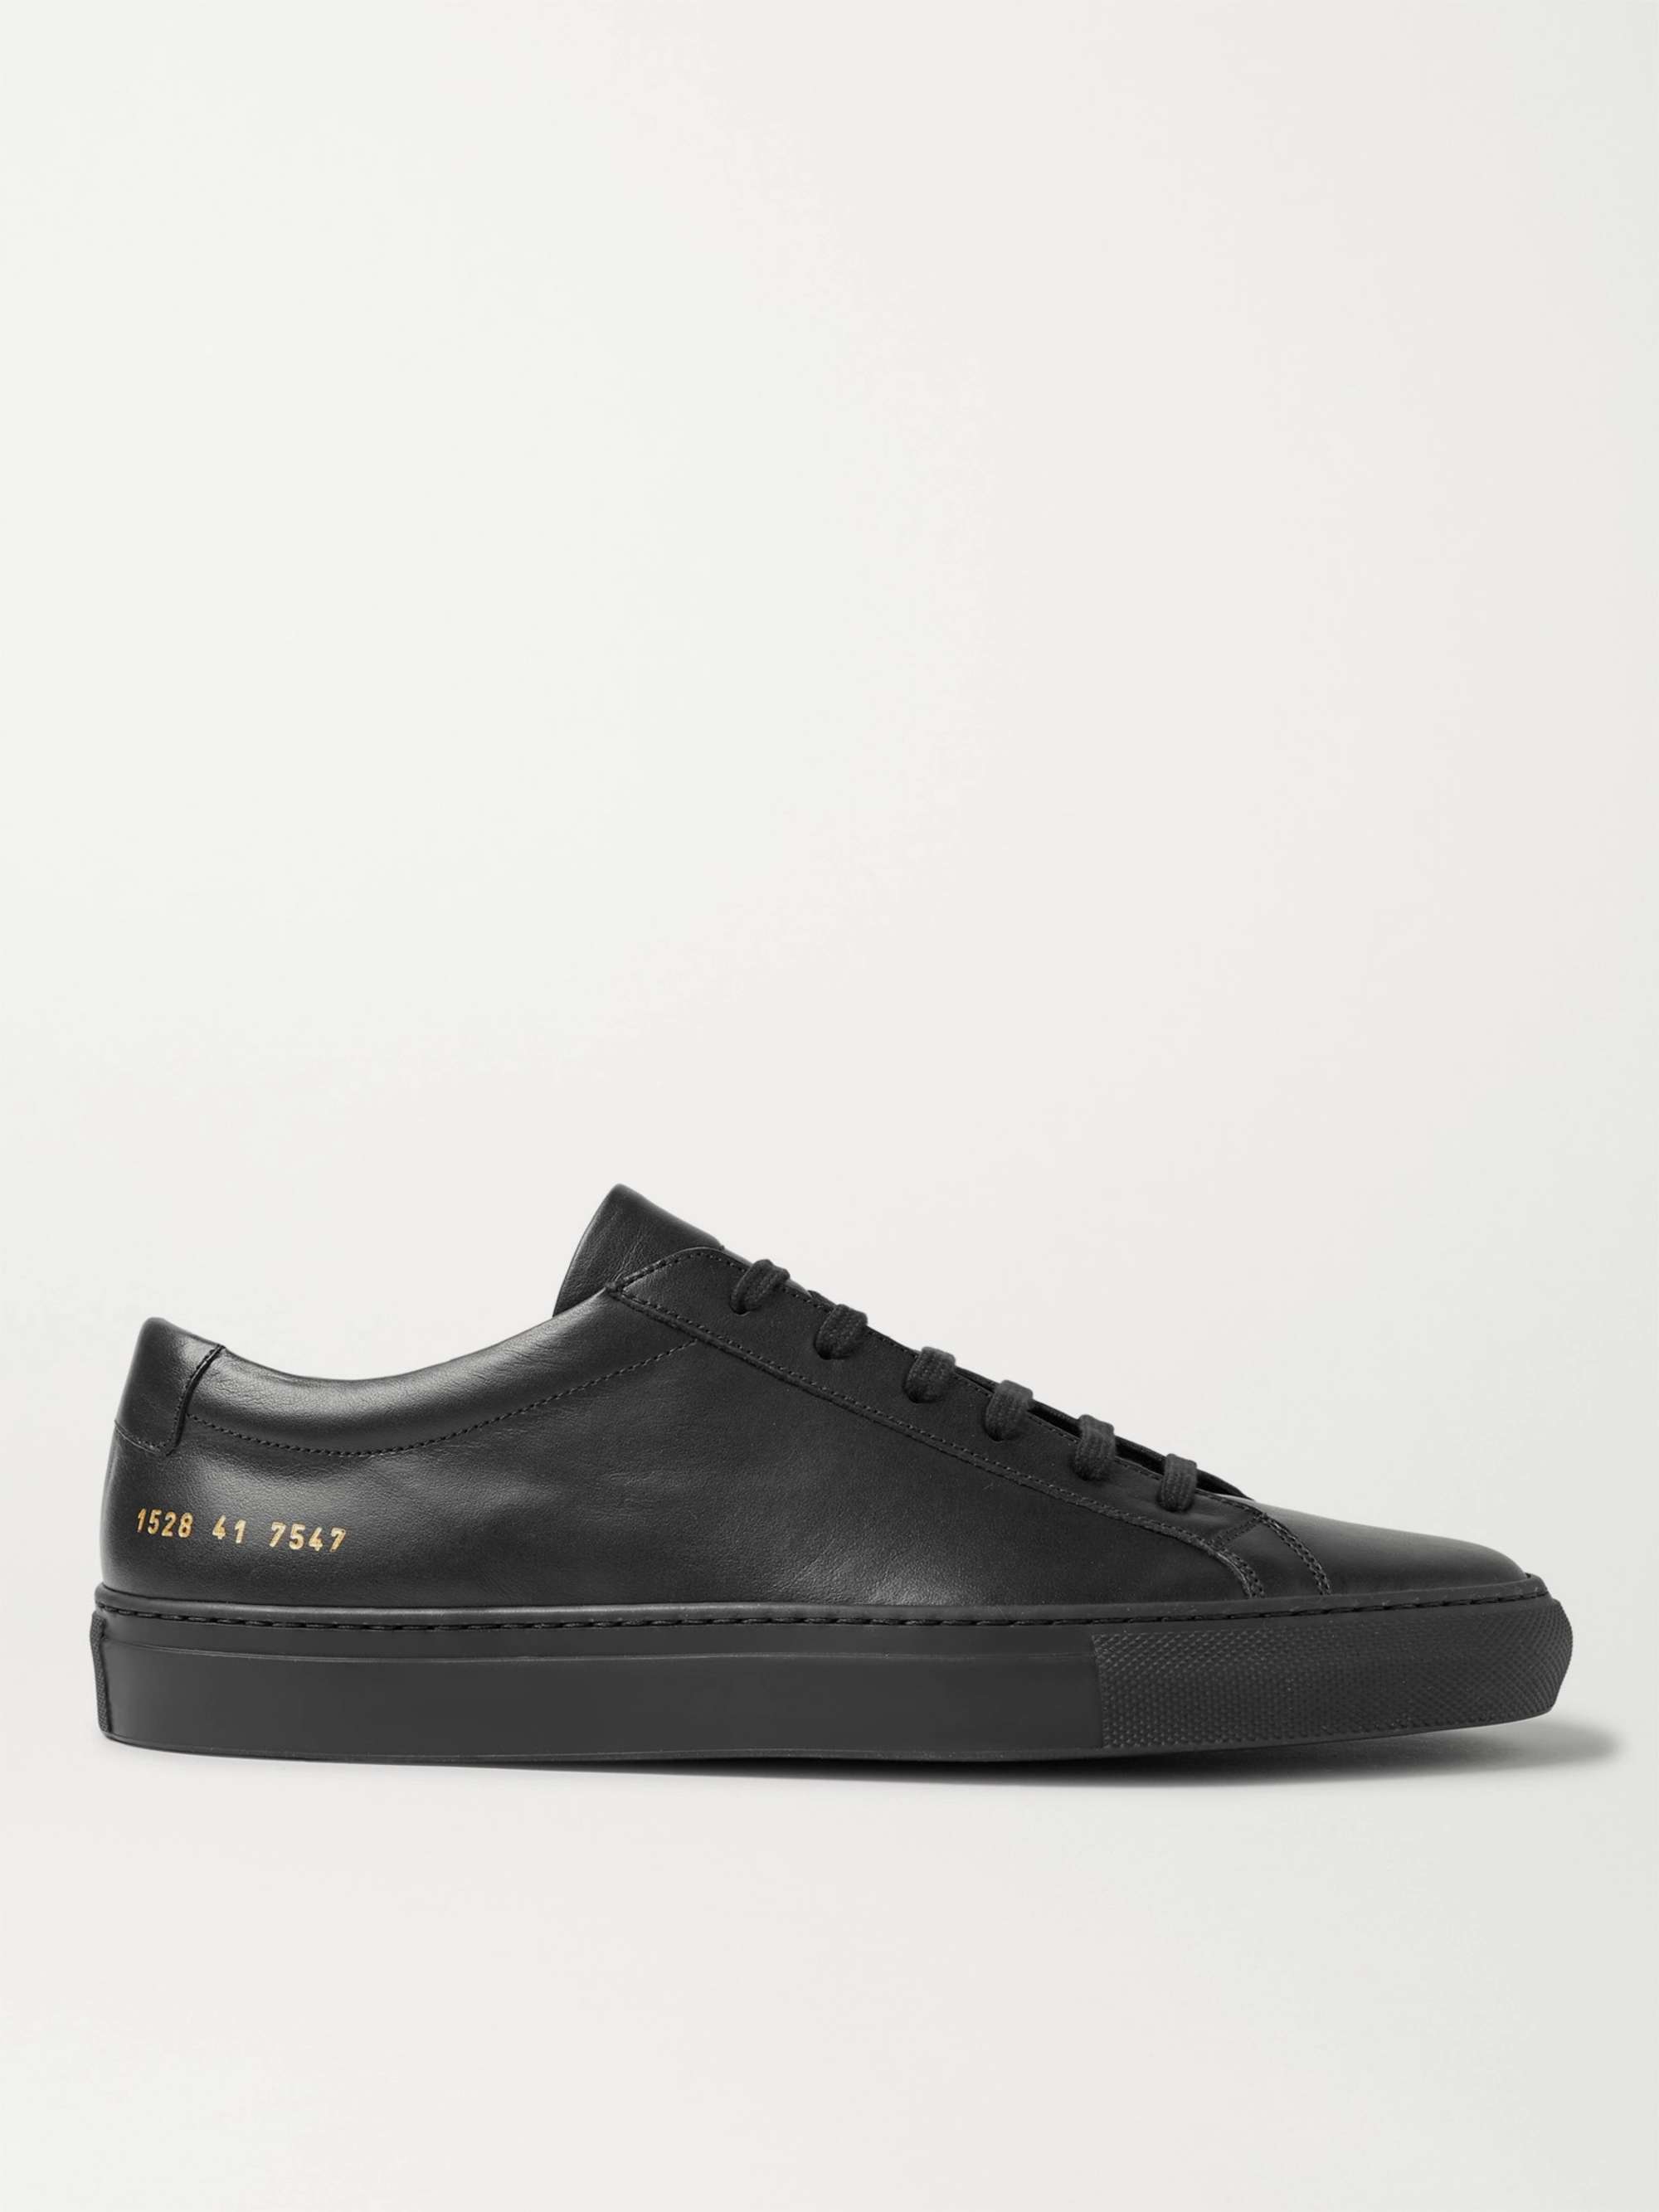 COMMON PROJECTS Original Achilles Sneakers | MR PORTER